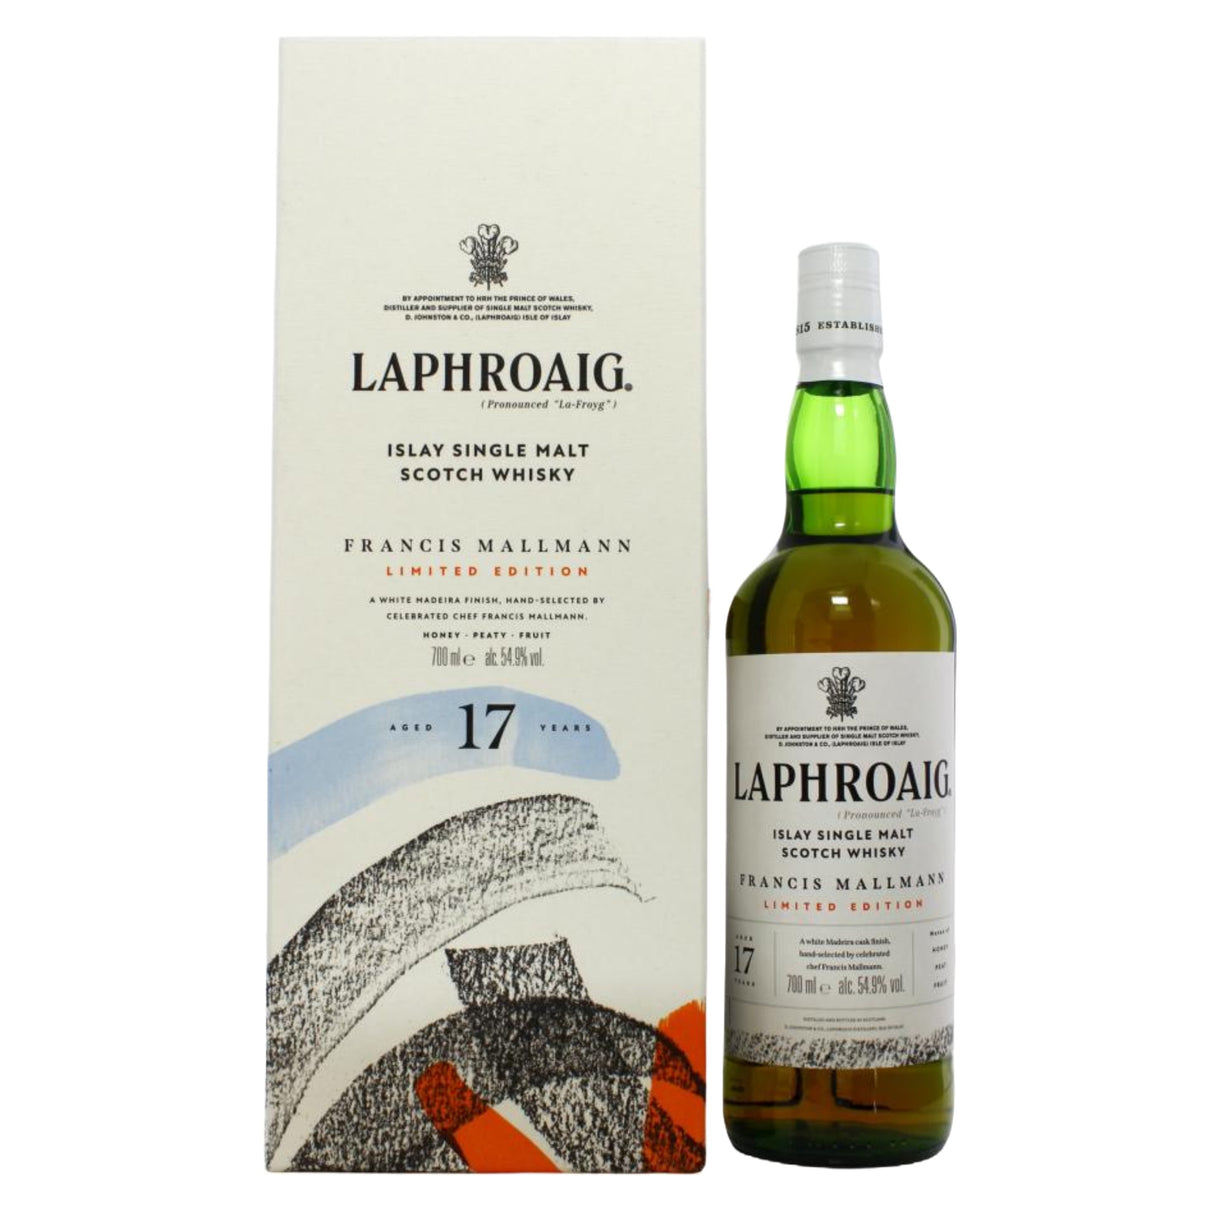 Laphroaig 17 Years Old Francis Mallmann Limited Edition Islay Single Malt Scotch Whisky